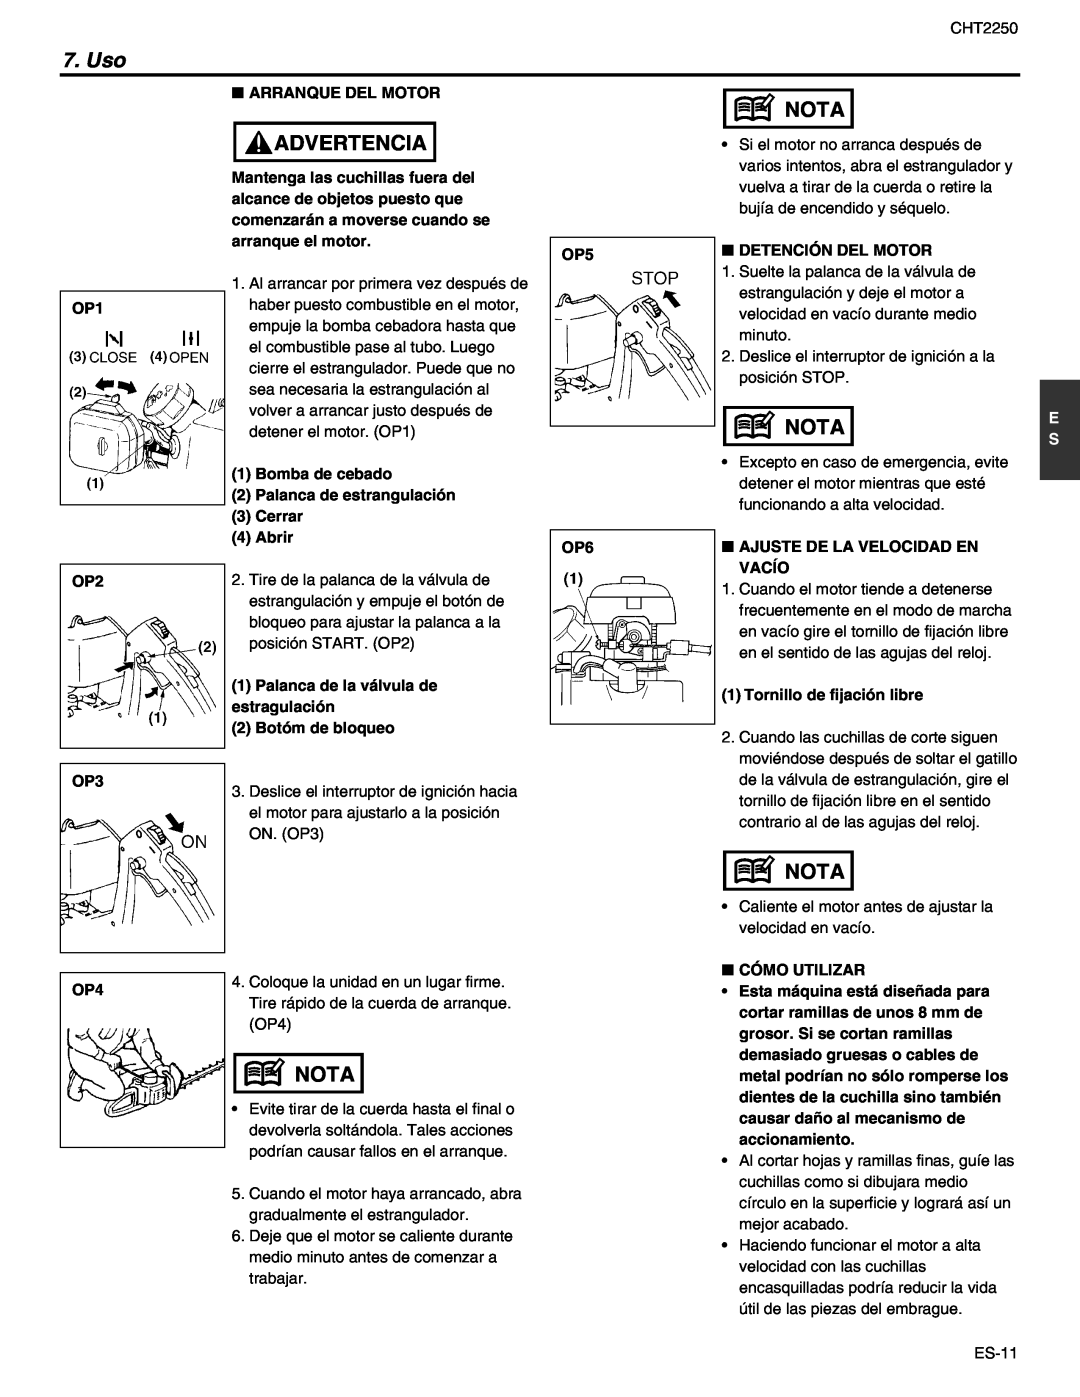 RedMax CHT2250 manual Uso, Advertencia, Nota 